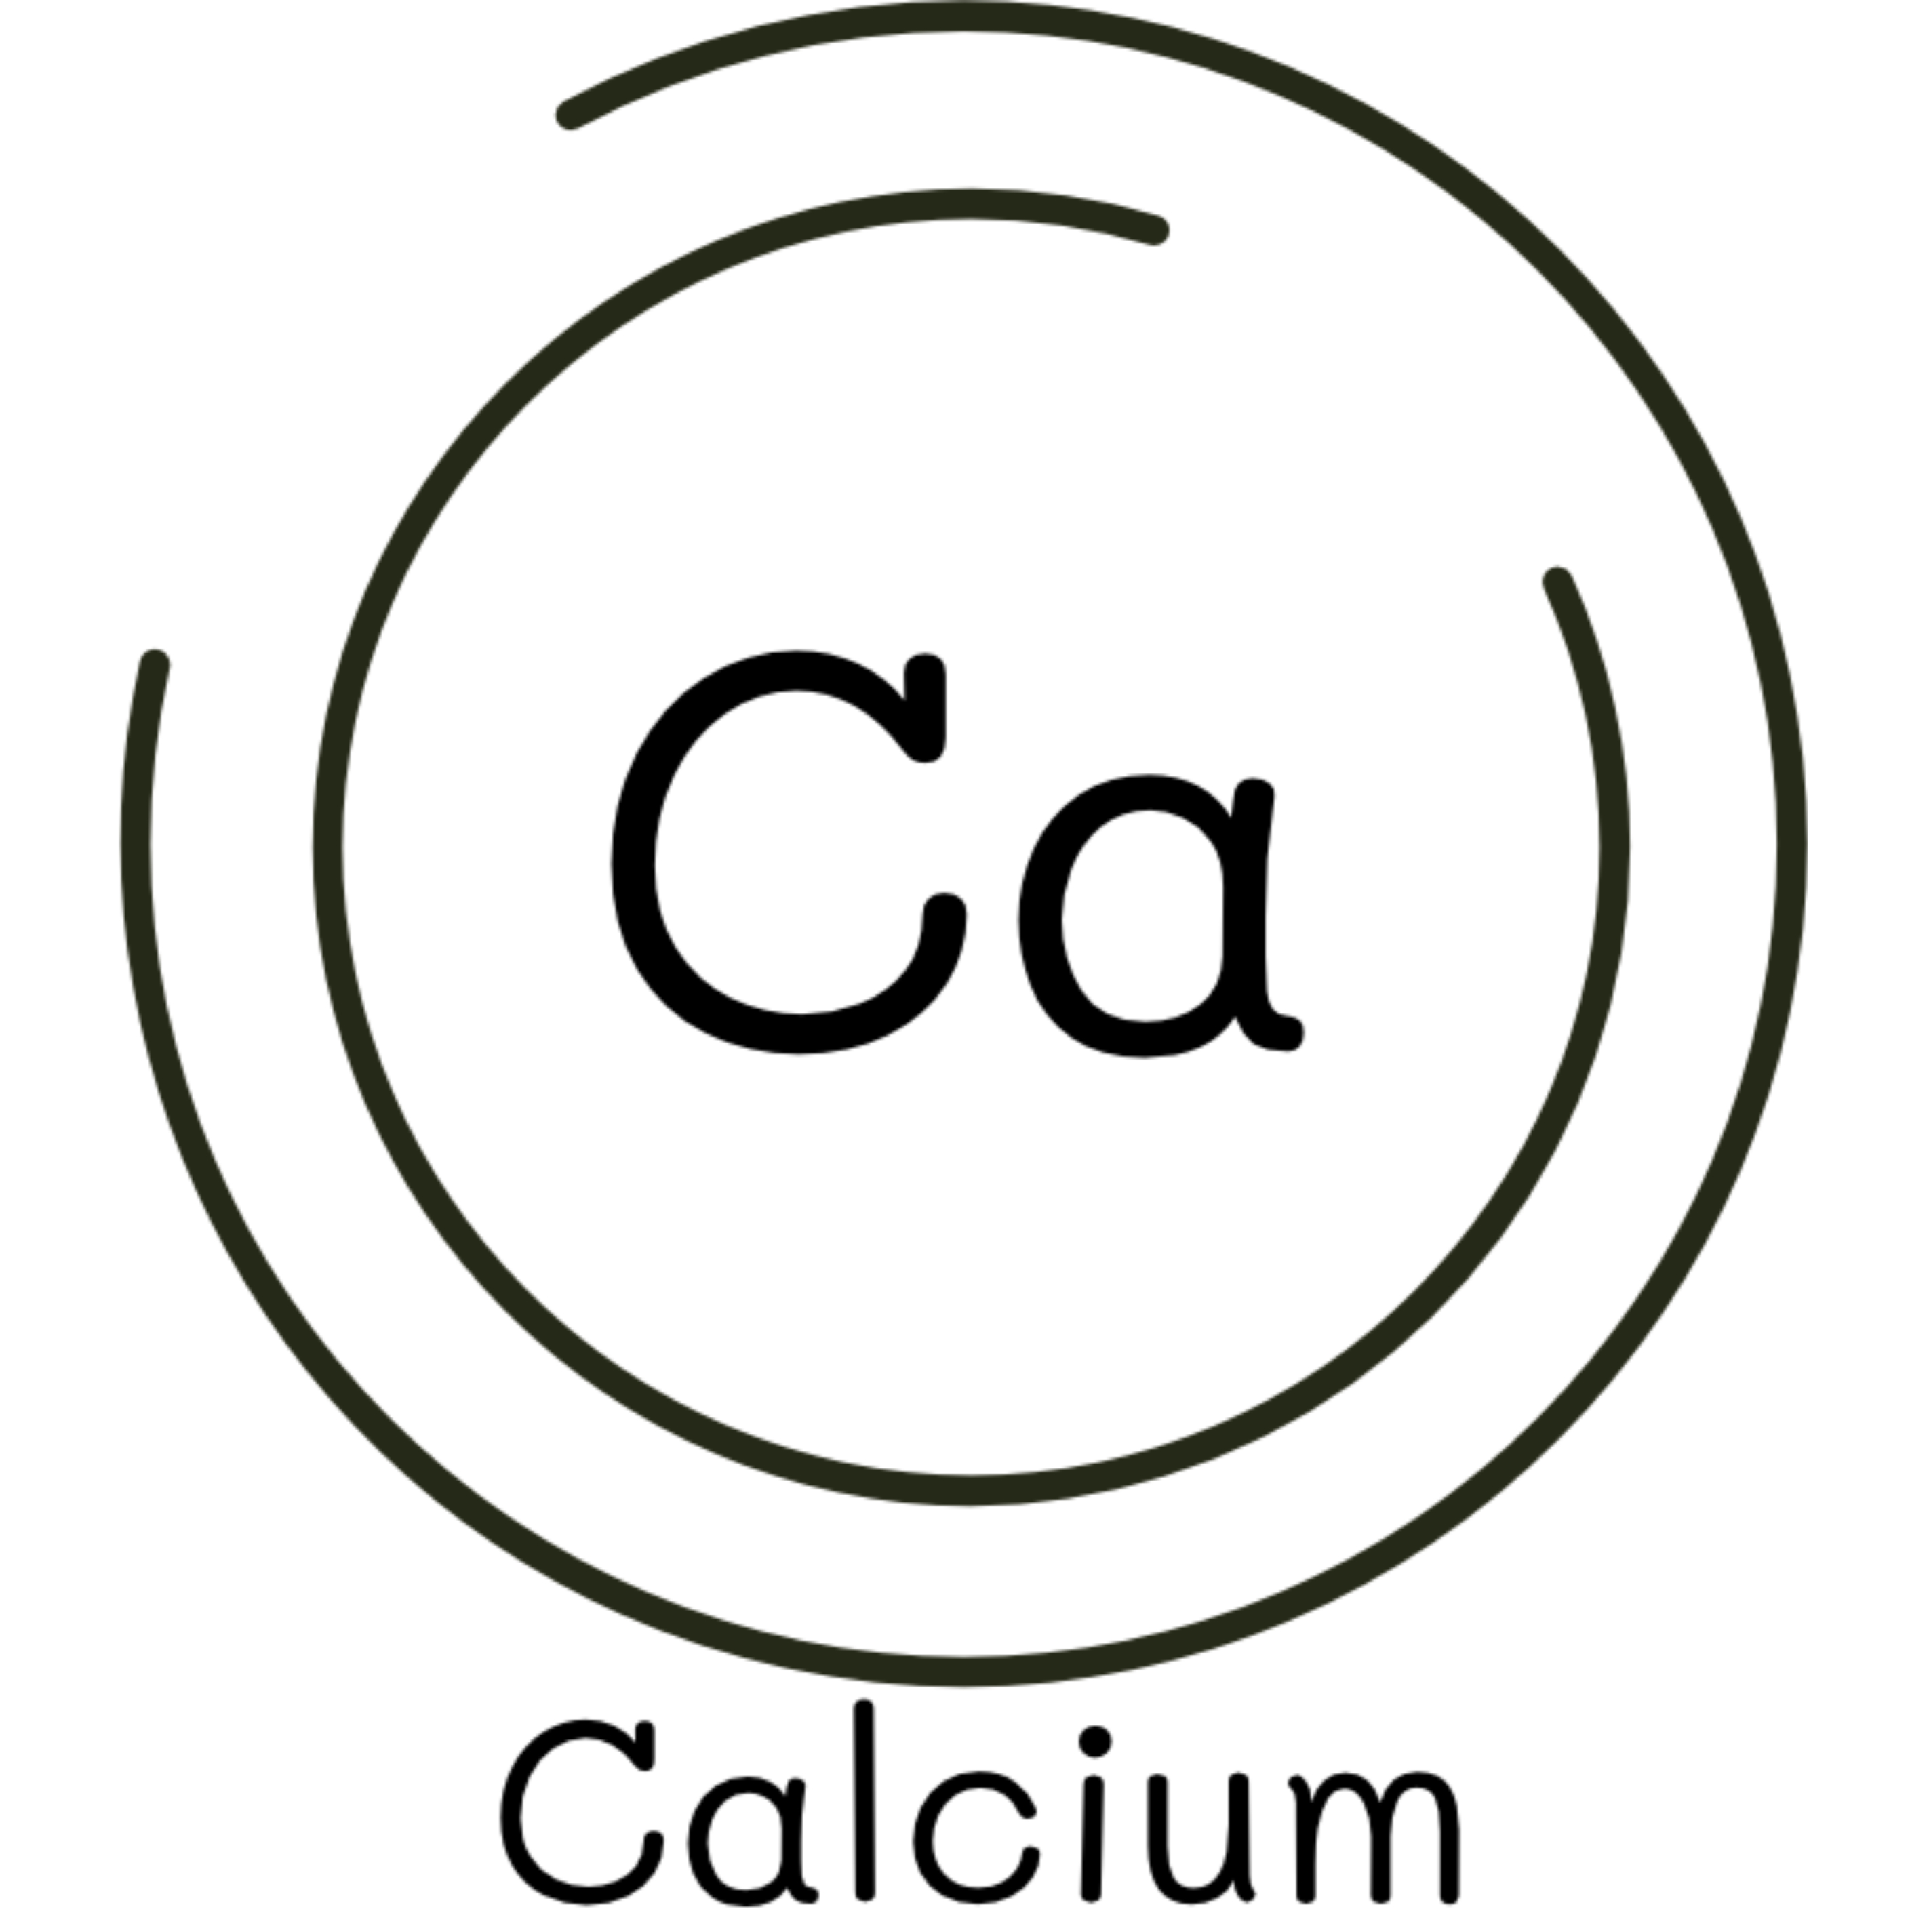 Yacon Kakaonibs enthalten viel Calcium